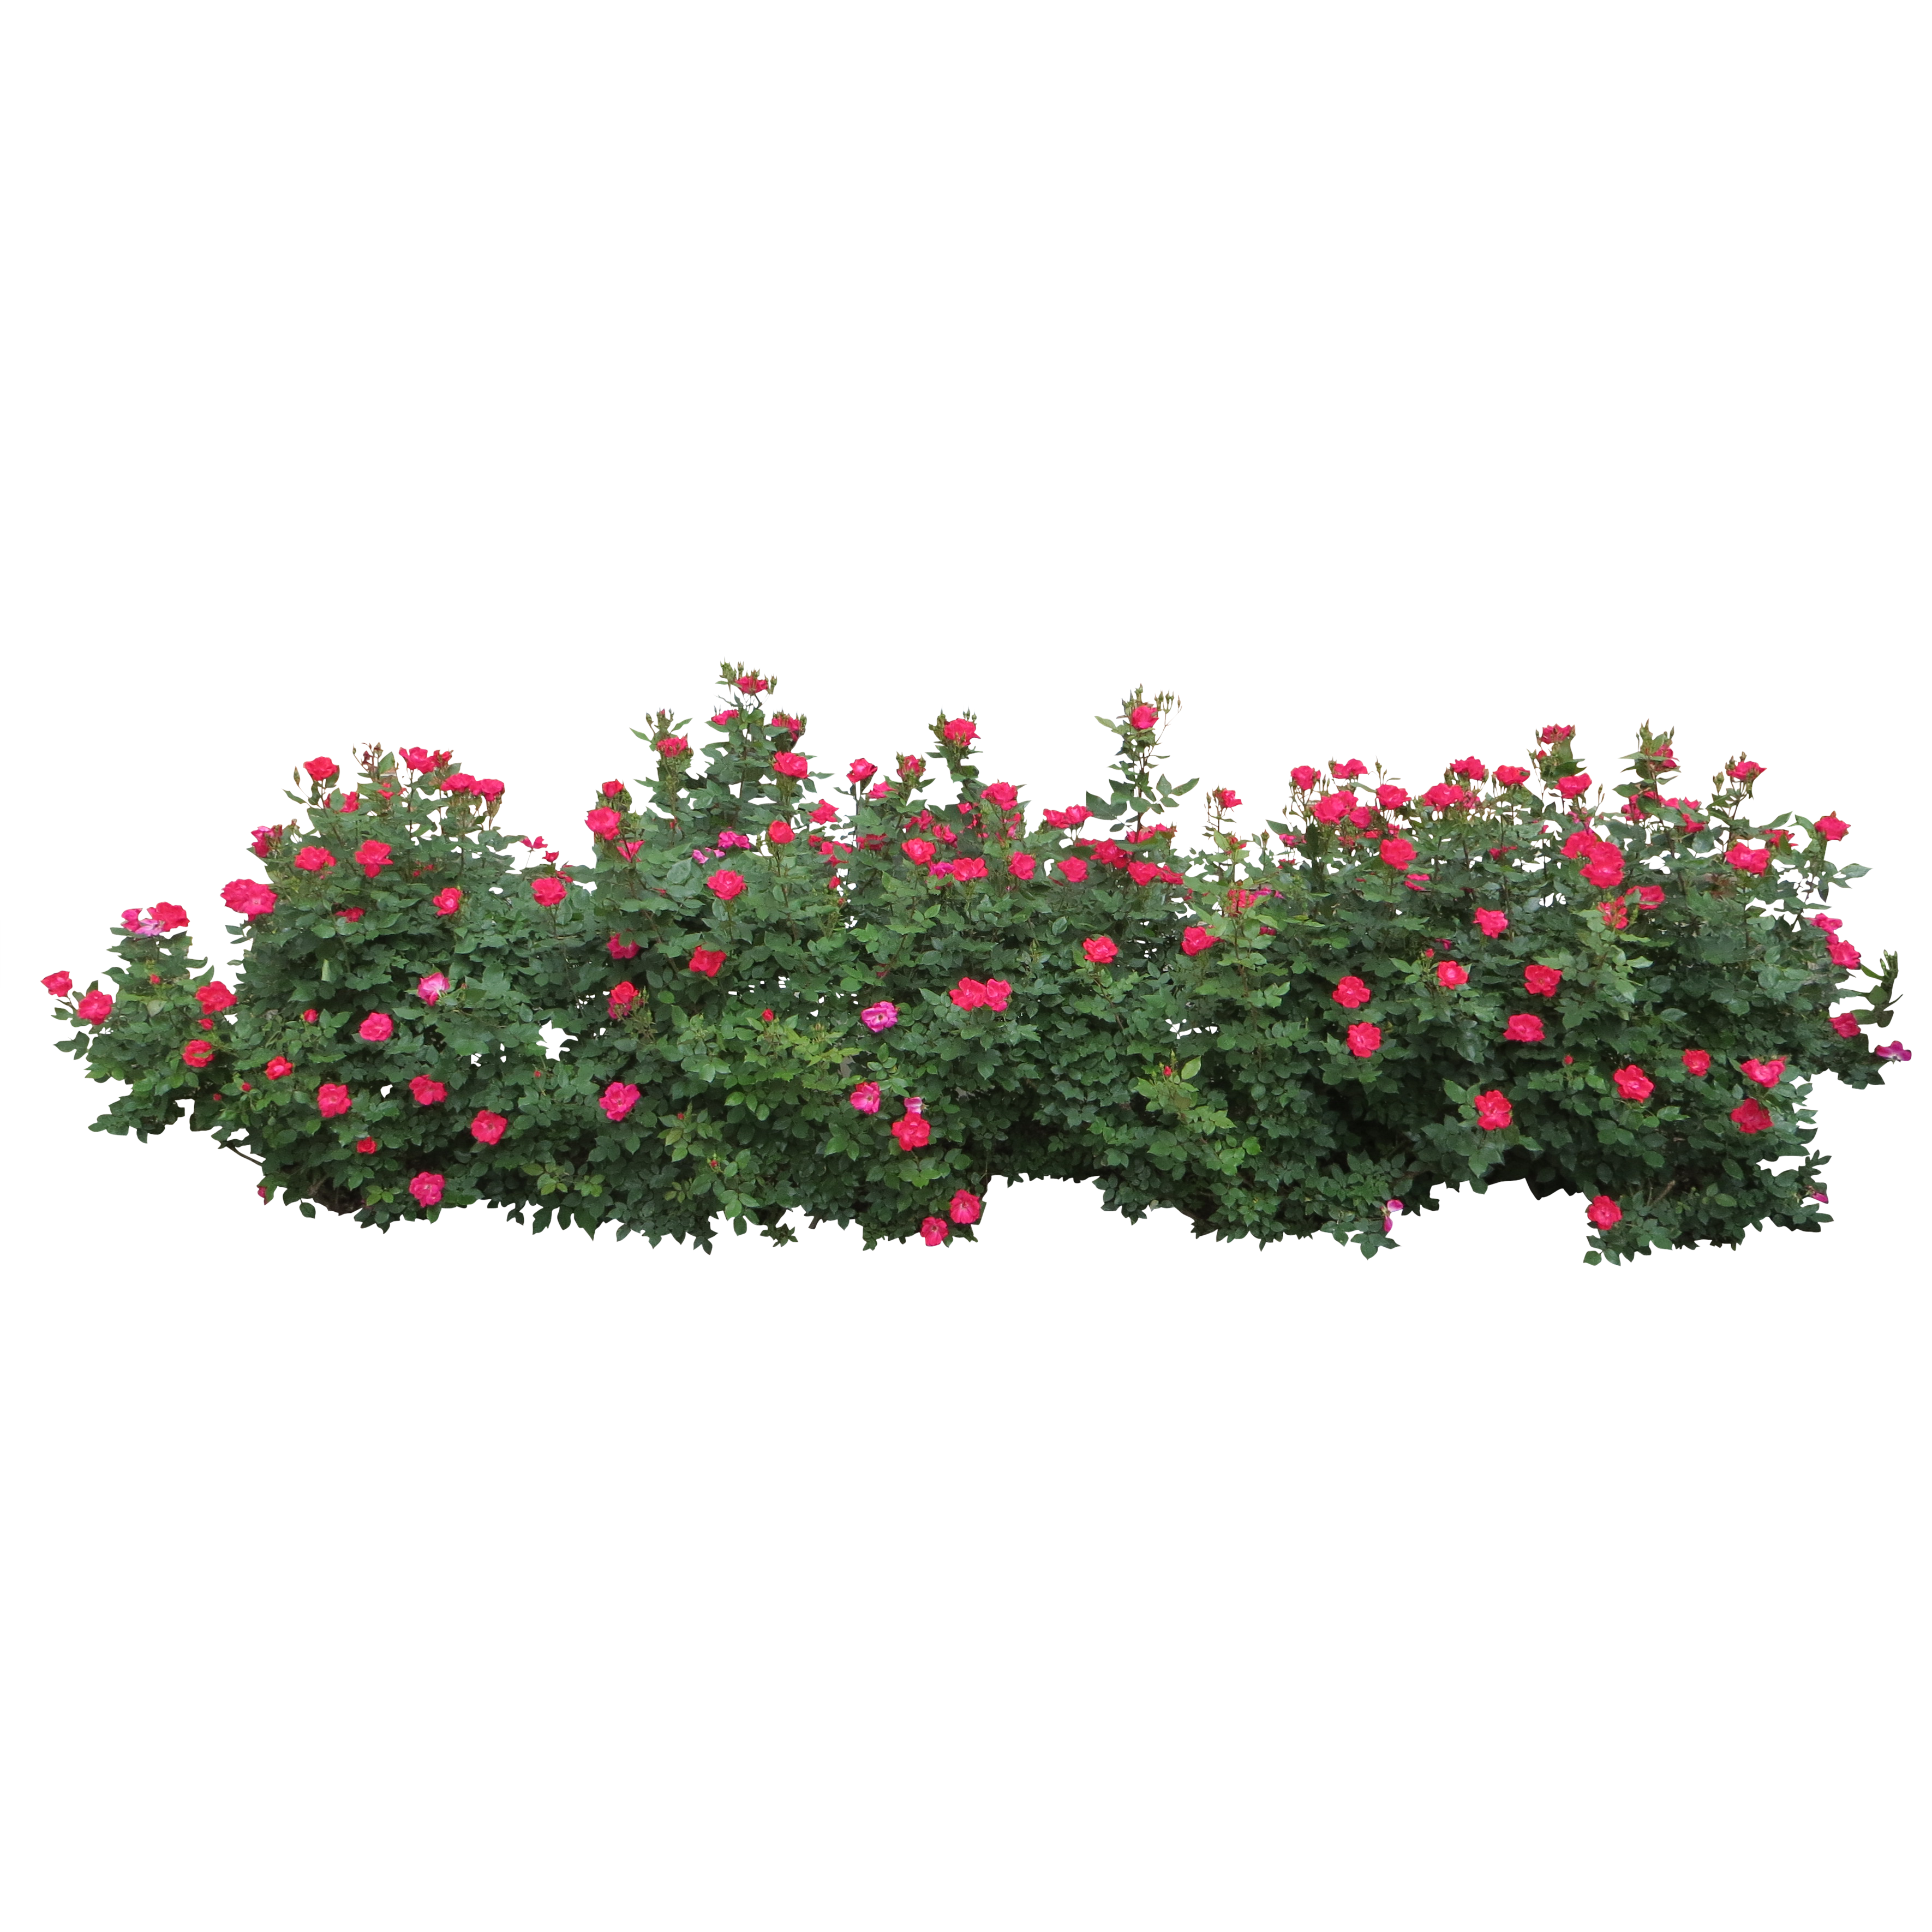 Download Pink Plant Shrub Tree Roses Centifolia HQ PNG Image | FreePNGImg